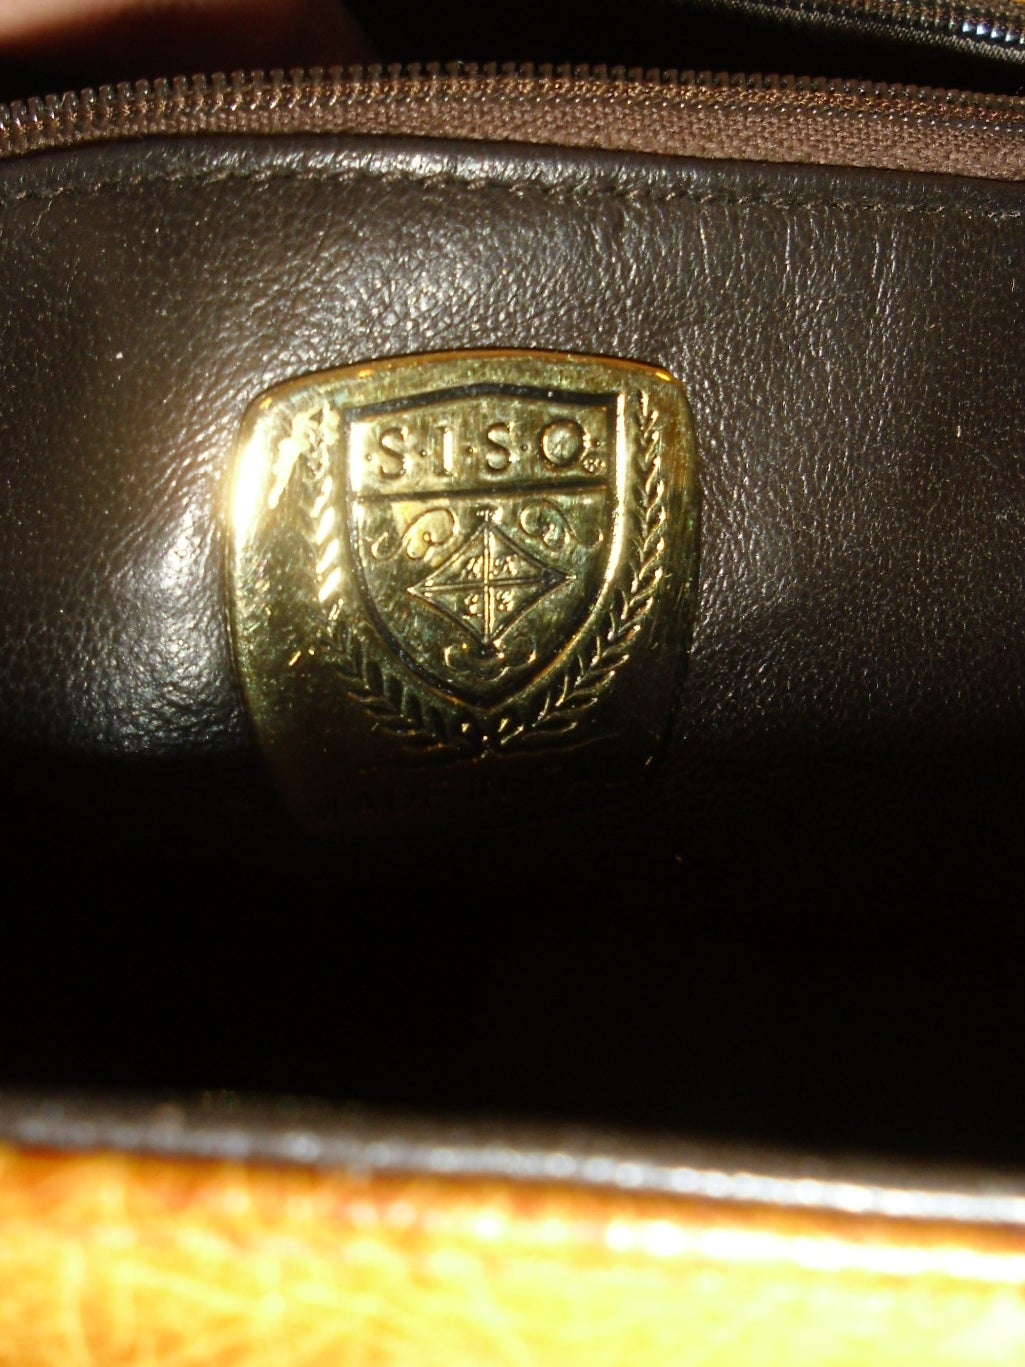 SISO Italy Genuine Ostrich Leather Kelly Handbag Purse Bag Top